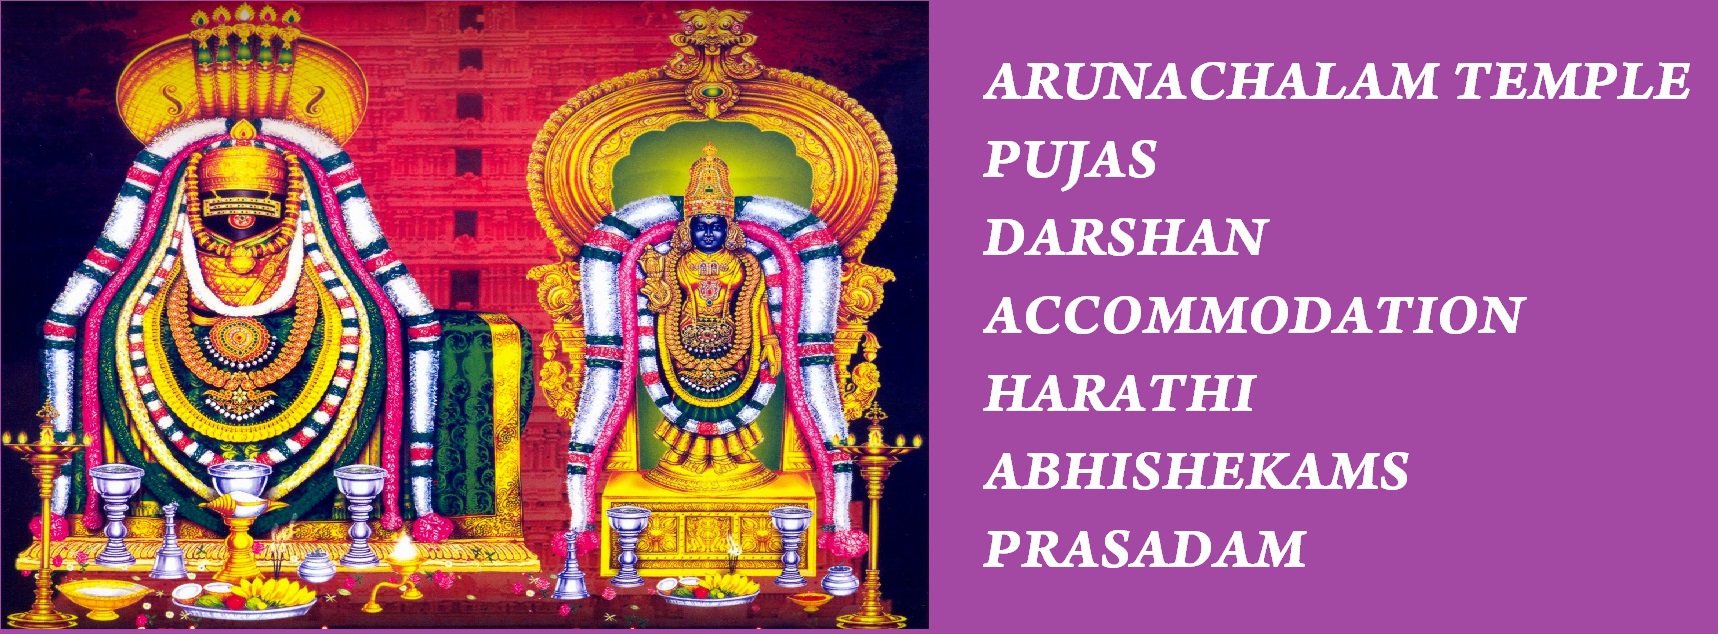 Arunachalam Temple Pujas Darshan Abhishekam Tickets Online Booking ...